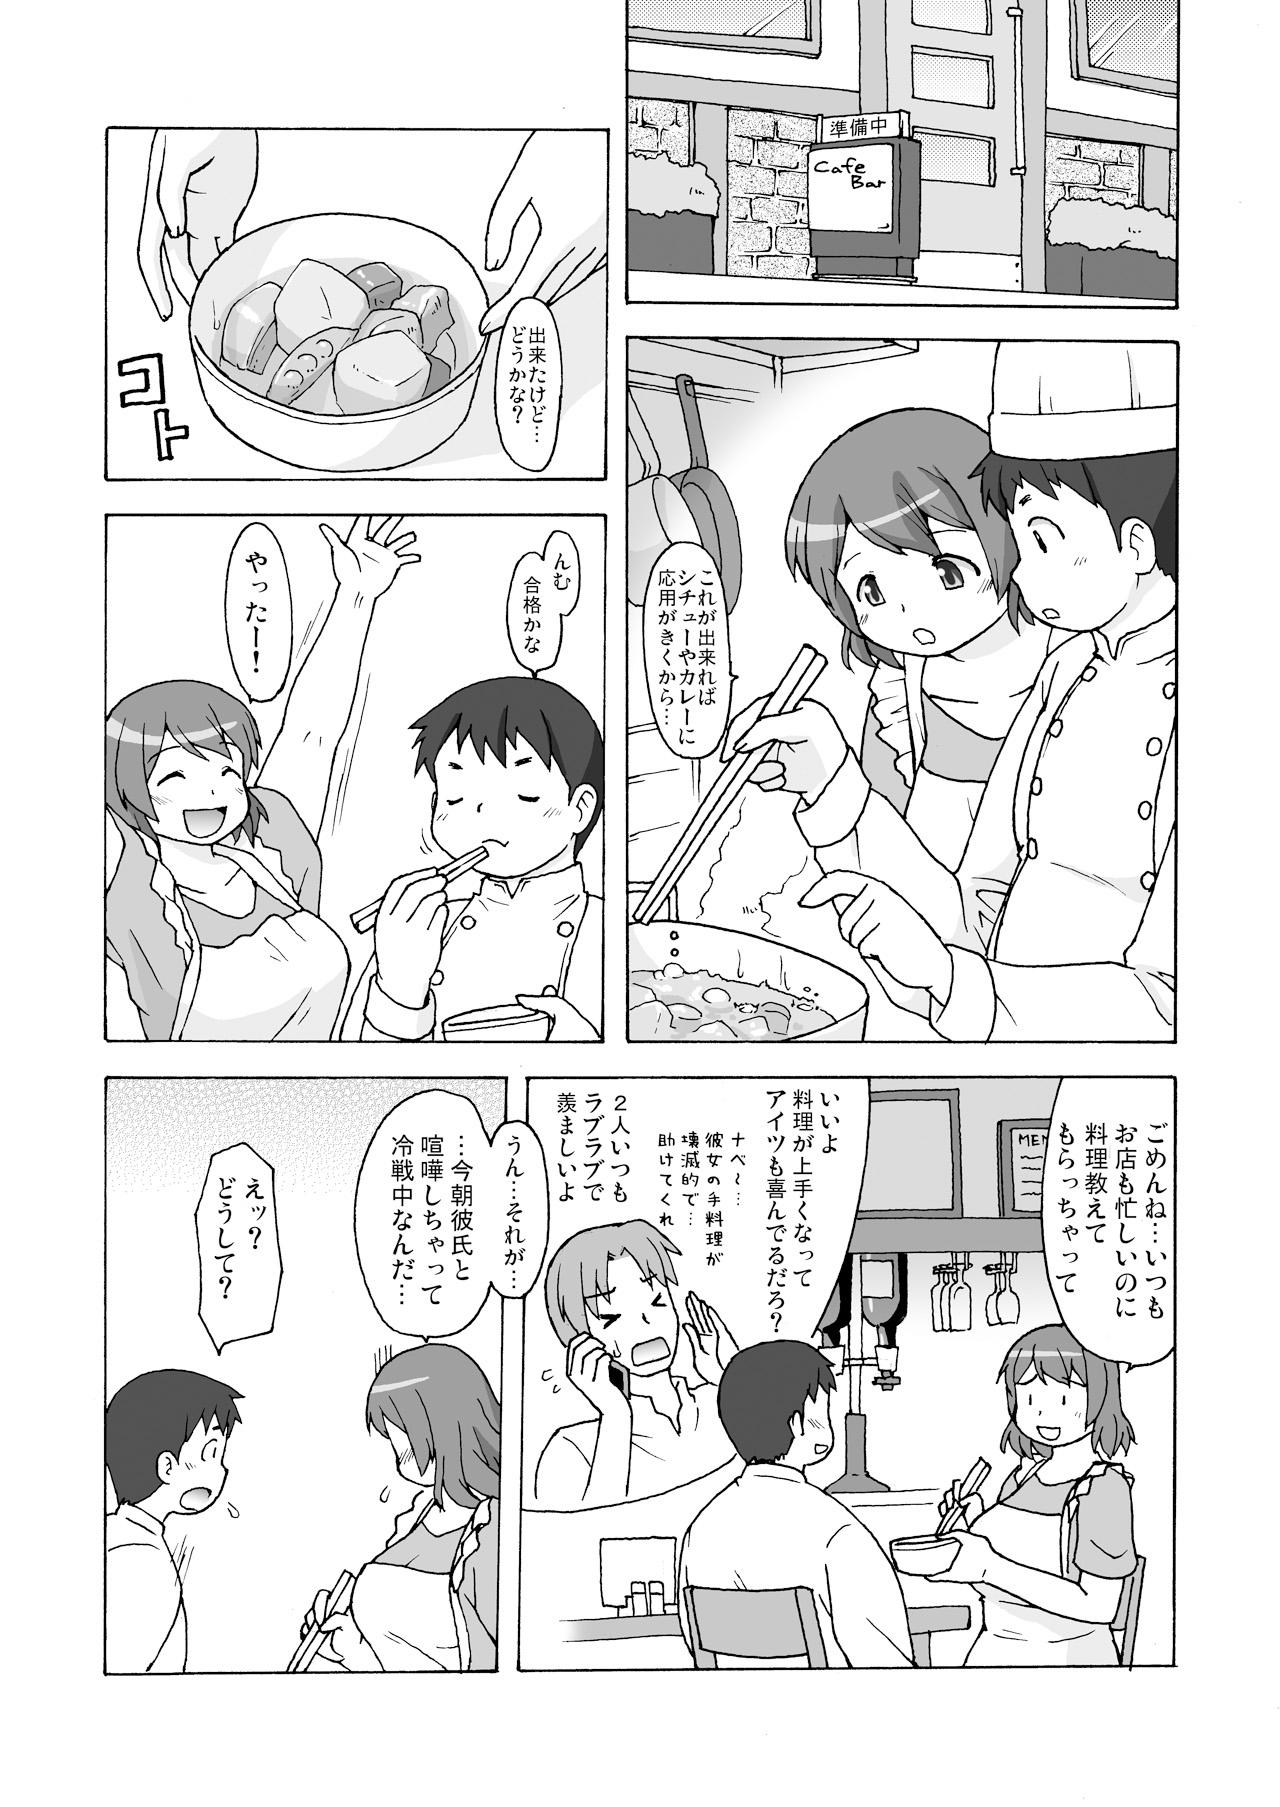 Female Niku's Grill - Original Glam - Page 2